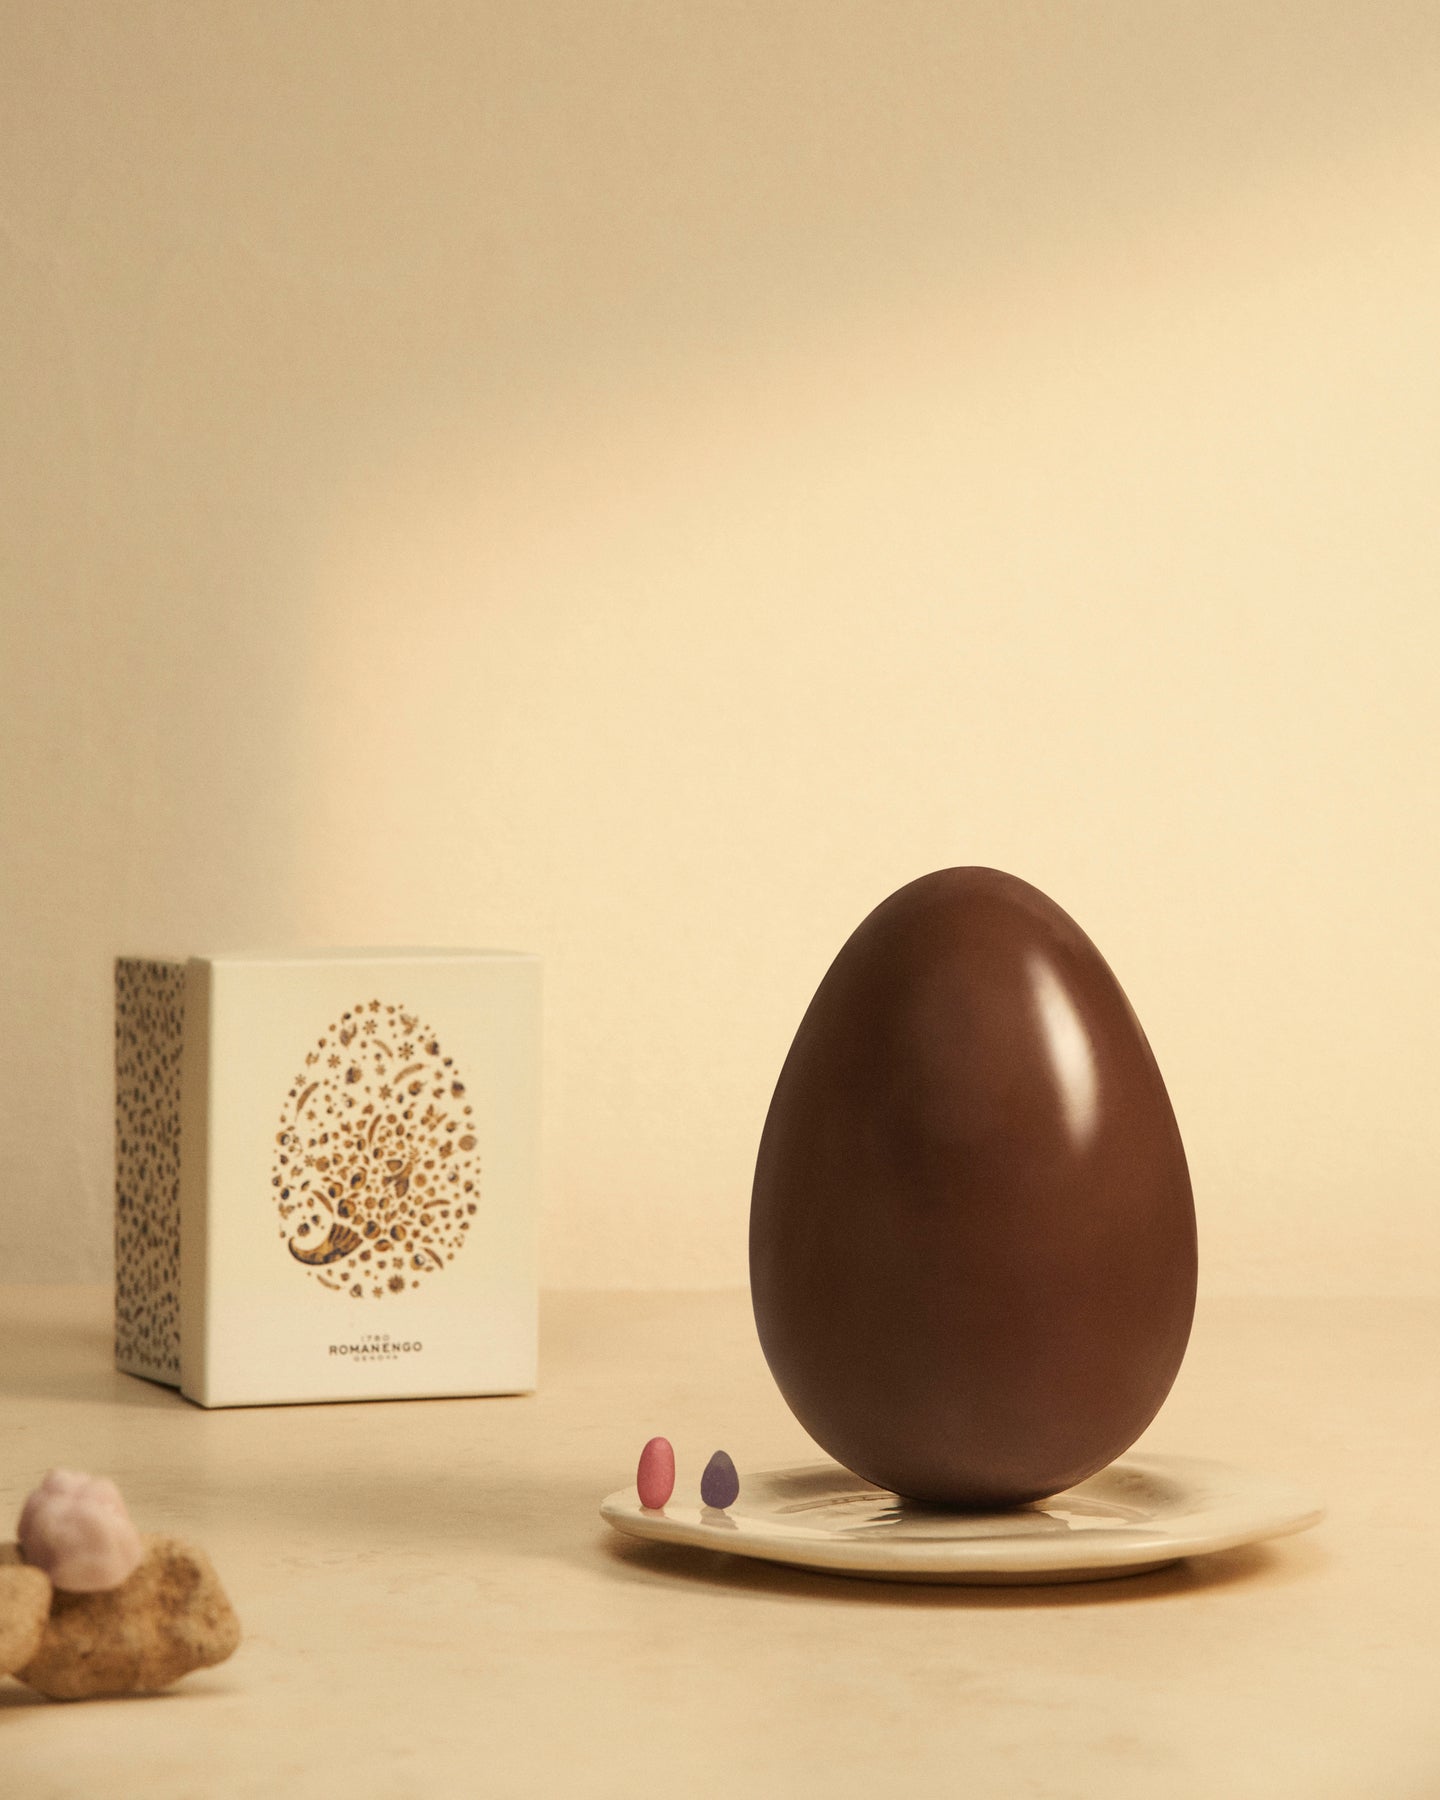 Milk Chocolate Eggs with New Fantasy Box